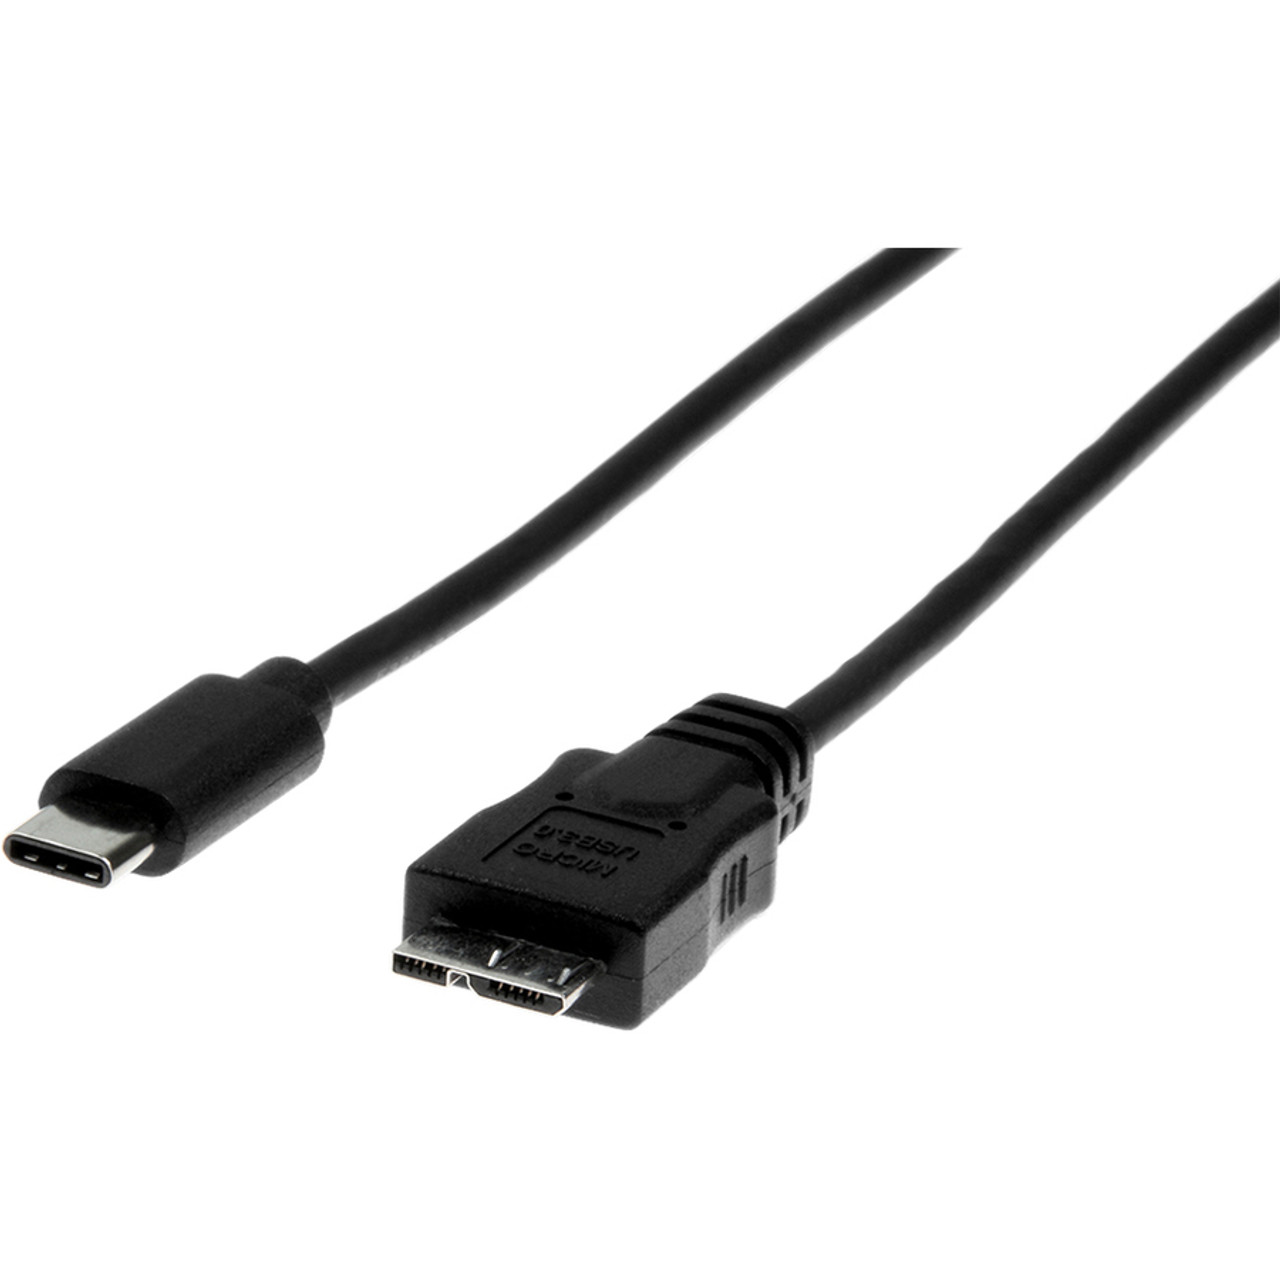 Rocstor Premium USB-C to Micro-B Cable - Black - 3ft